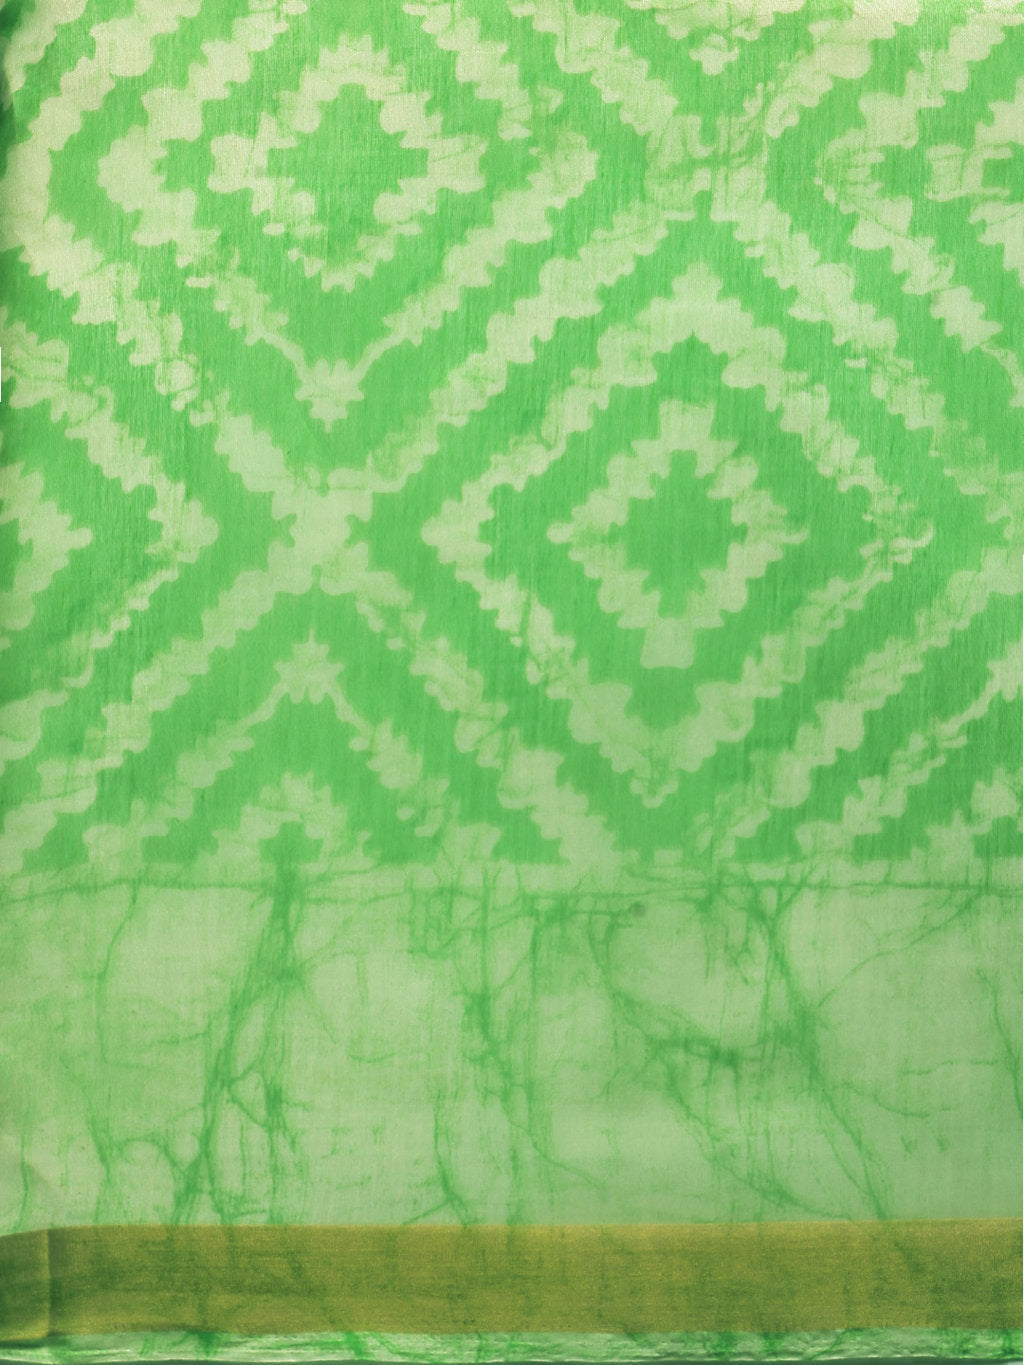 Women's Green Cotton Woven Work Traditional Saree - Sangam Prints